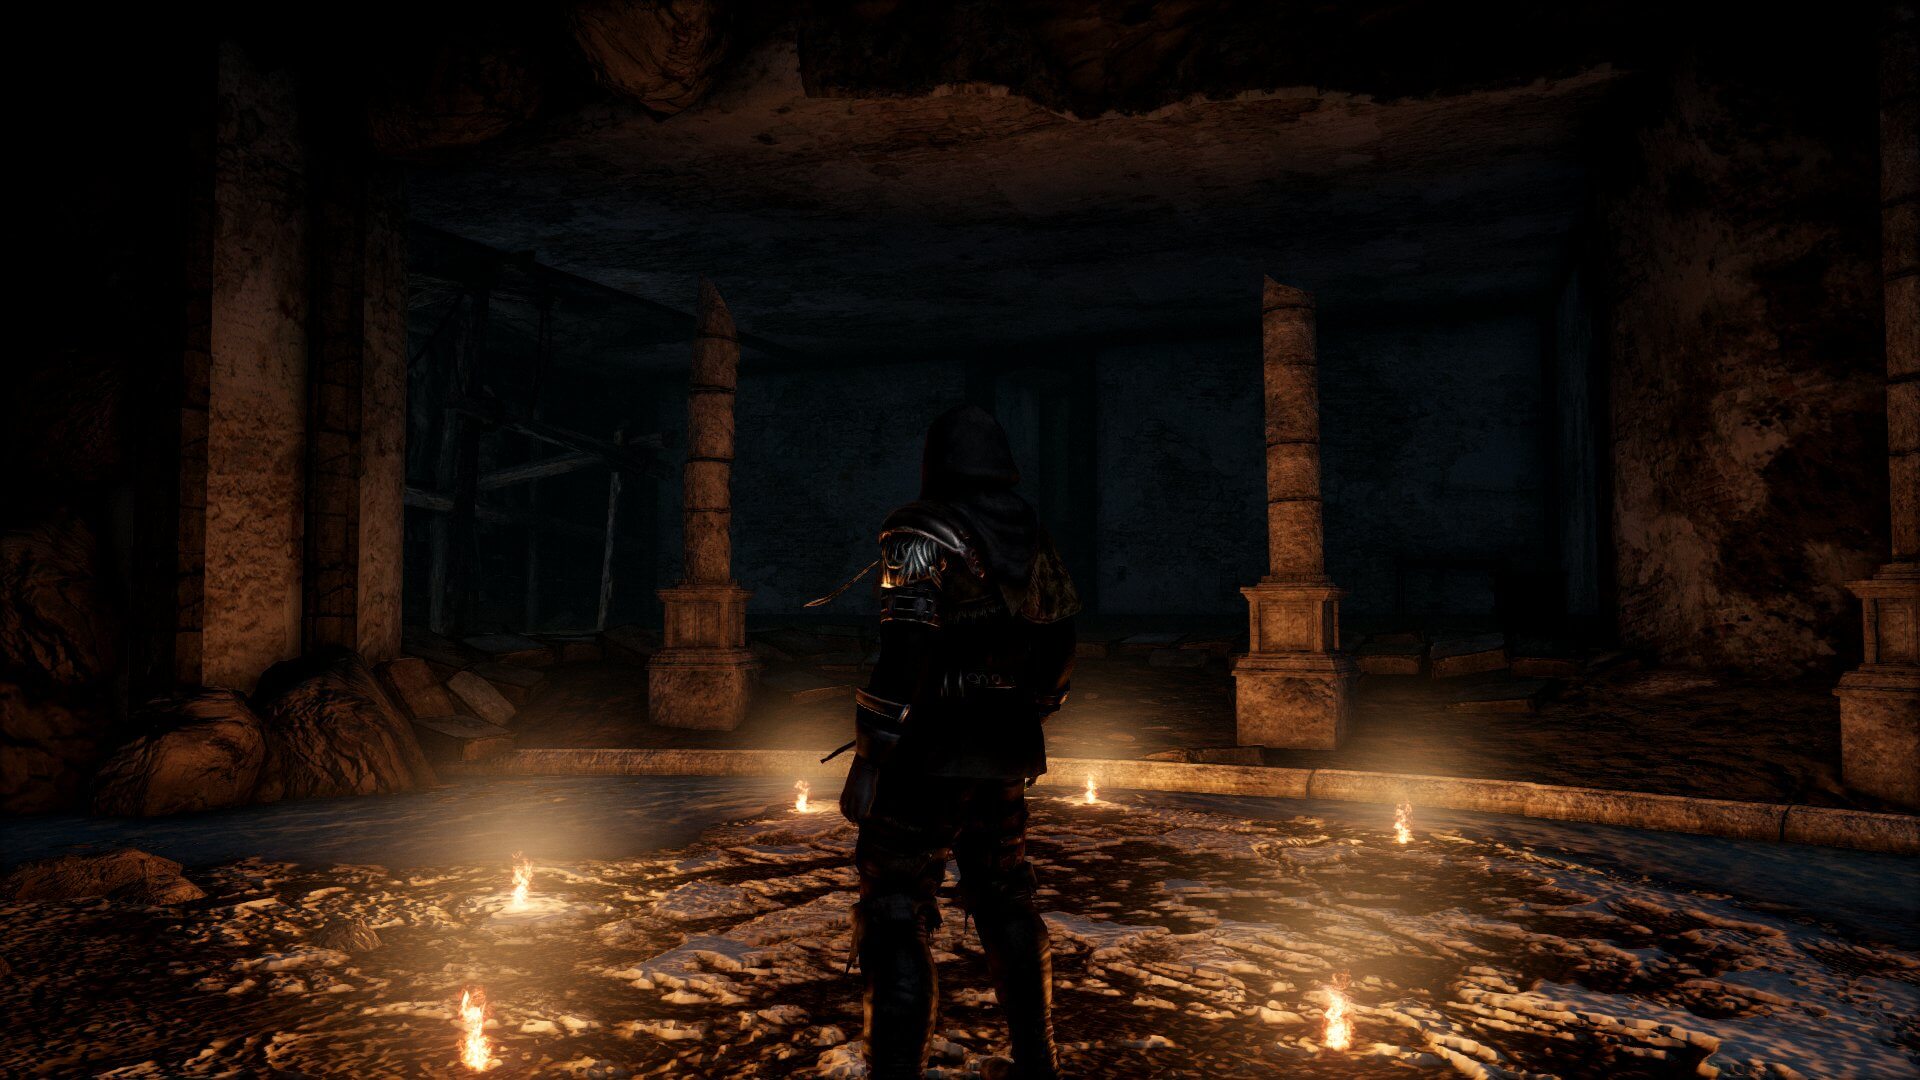 Dark Souls 2 Lighting Overhaul Mod in the Works By Lighting Artist